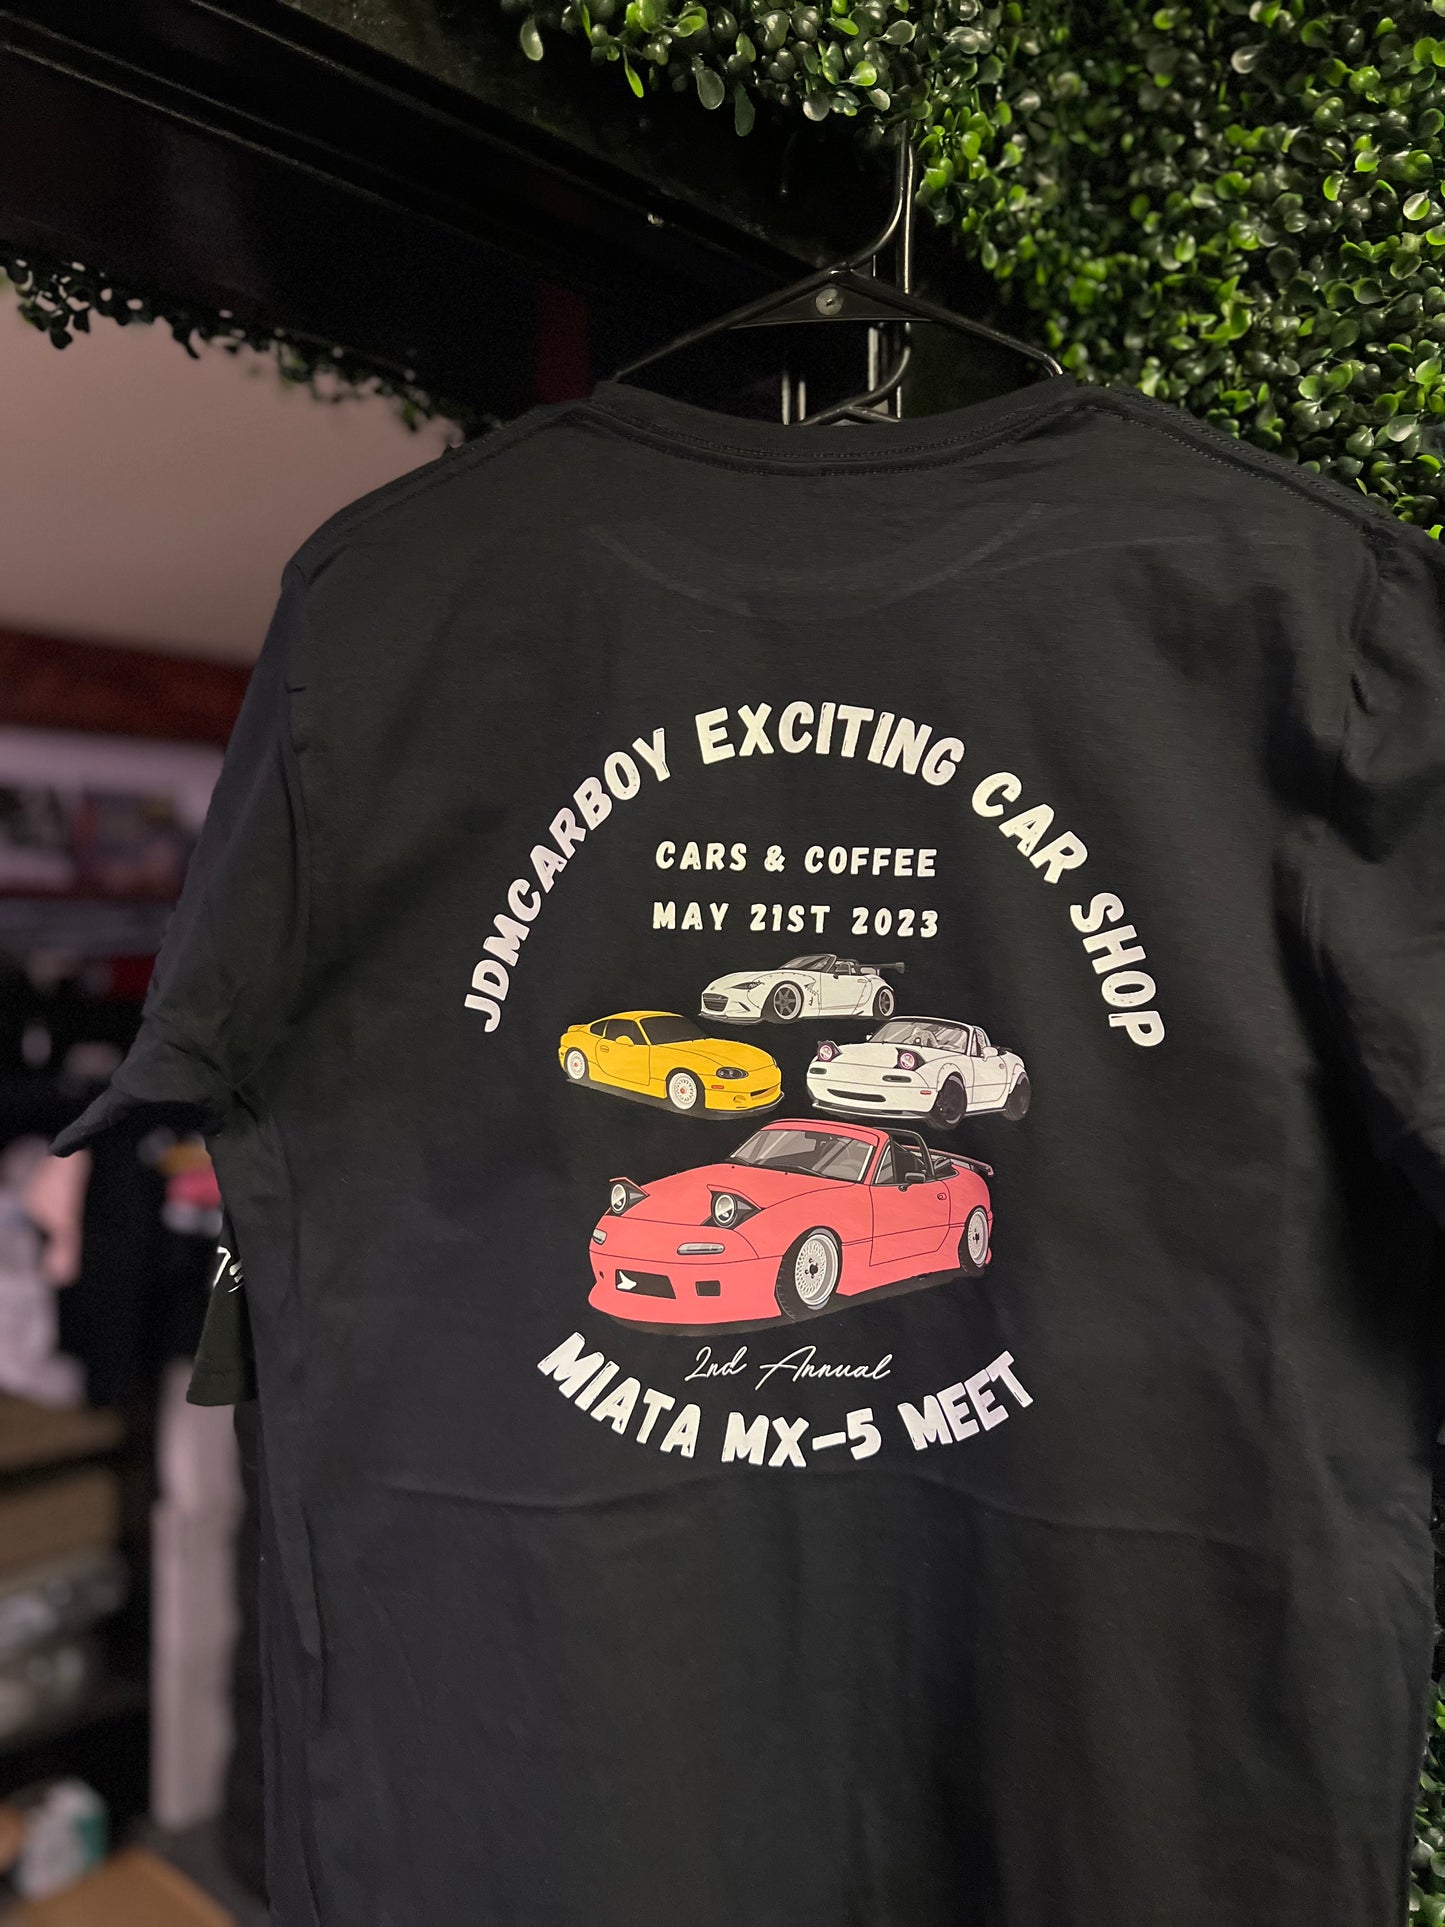 Cars & Coffee Miata MX-5 Meet Part 2 T-Shirt